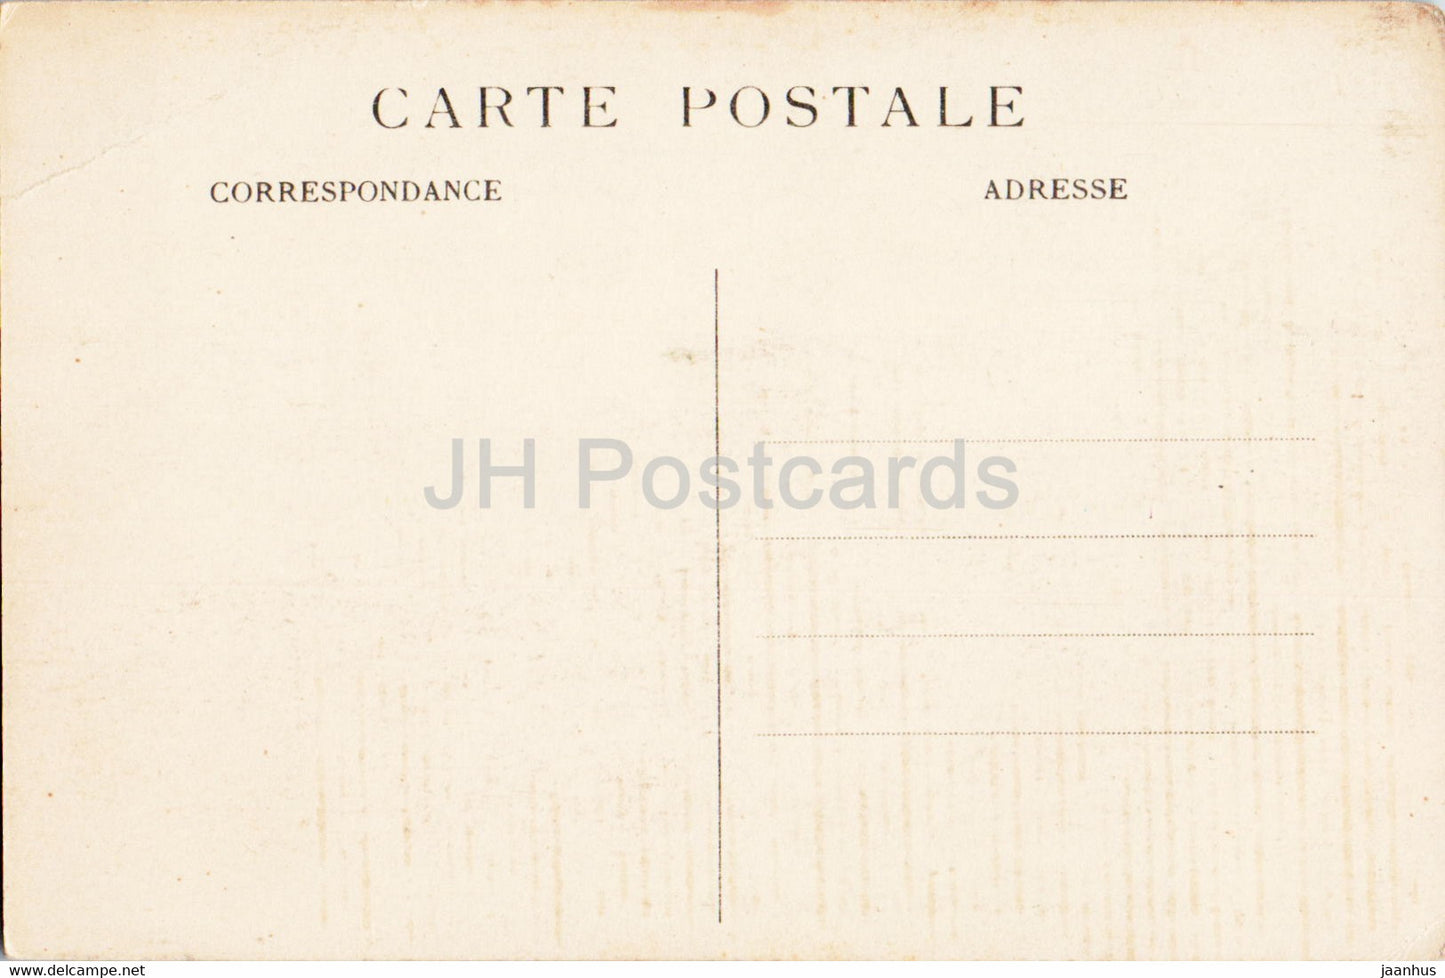 Lyon - Notre Dame de Fourviere - L'Abside - cathedral - 264 - old postcard - France - unused